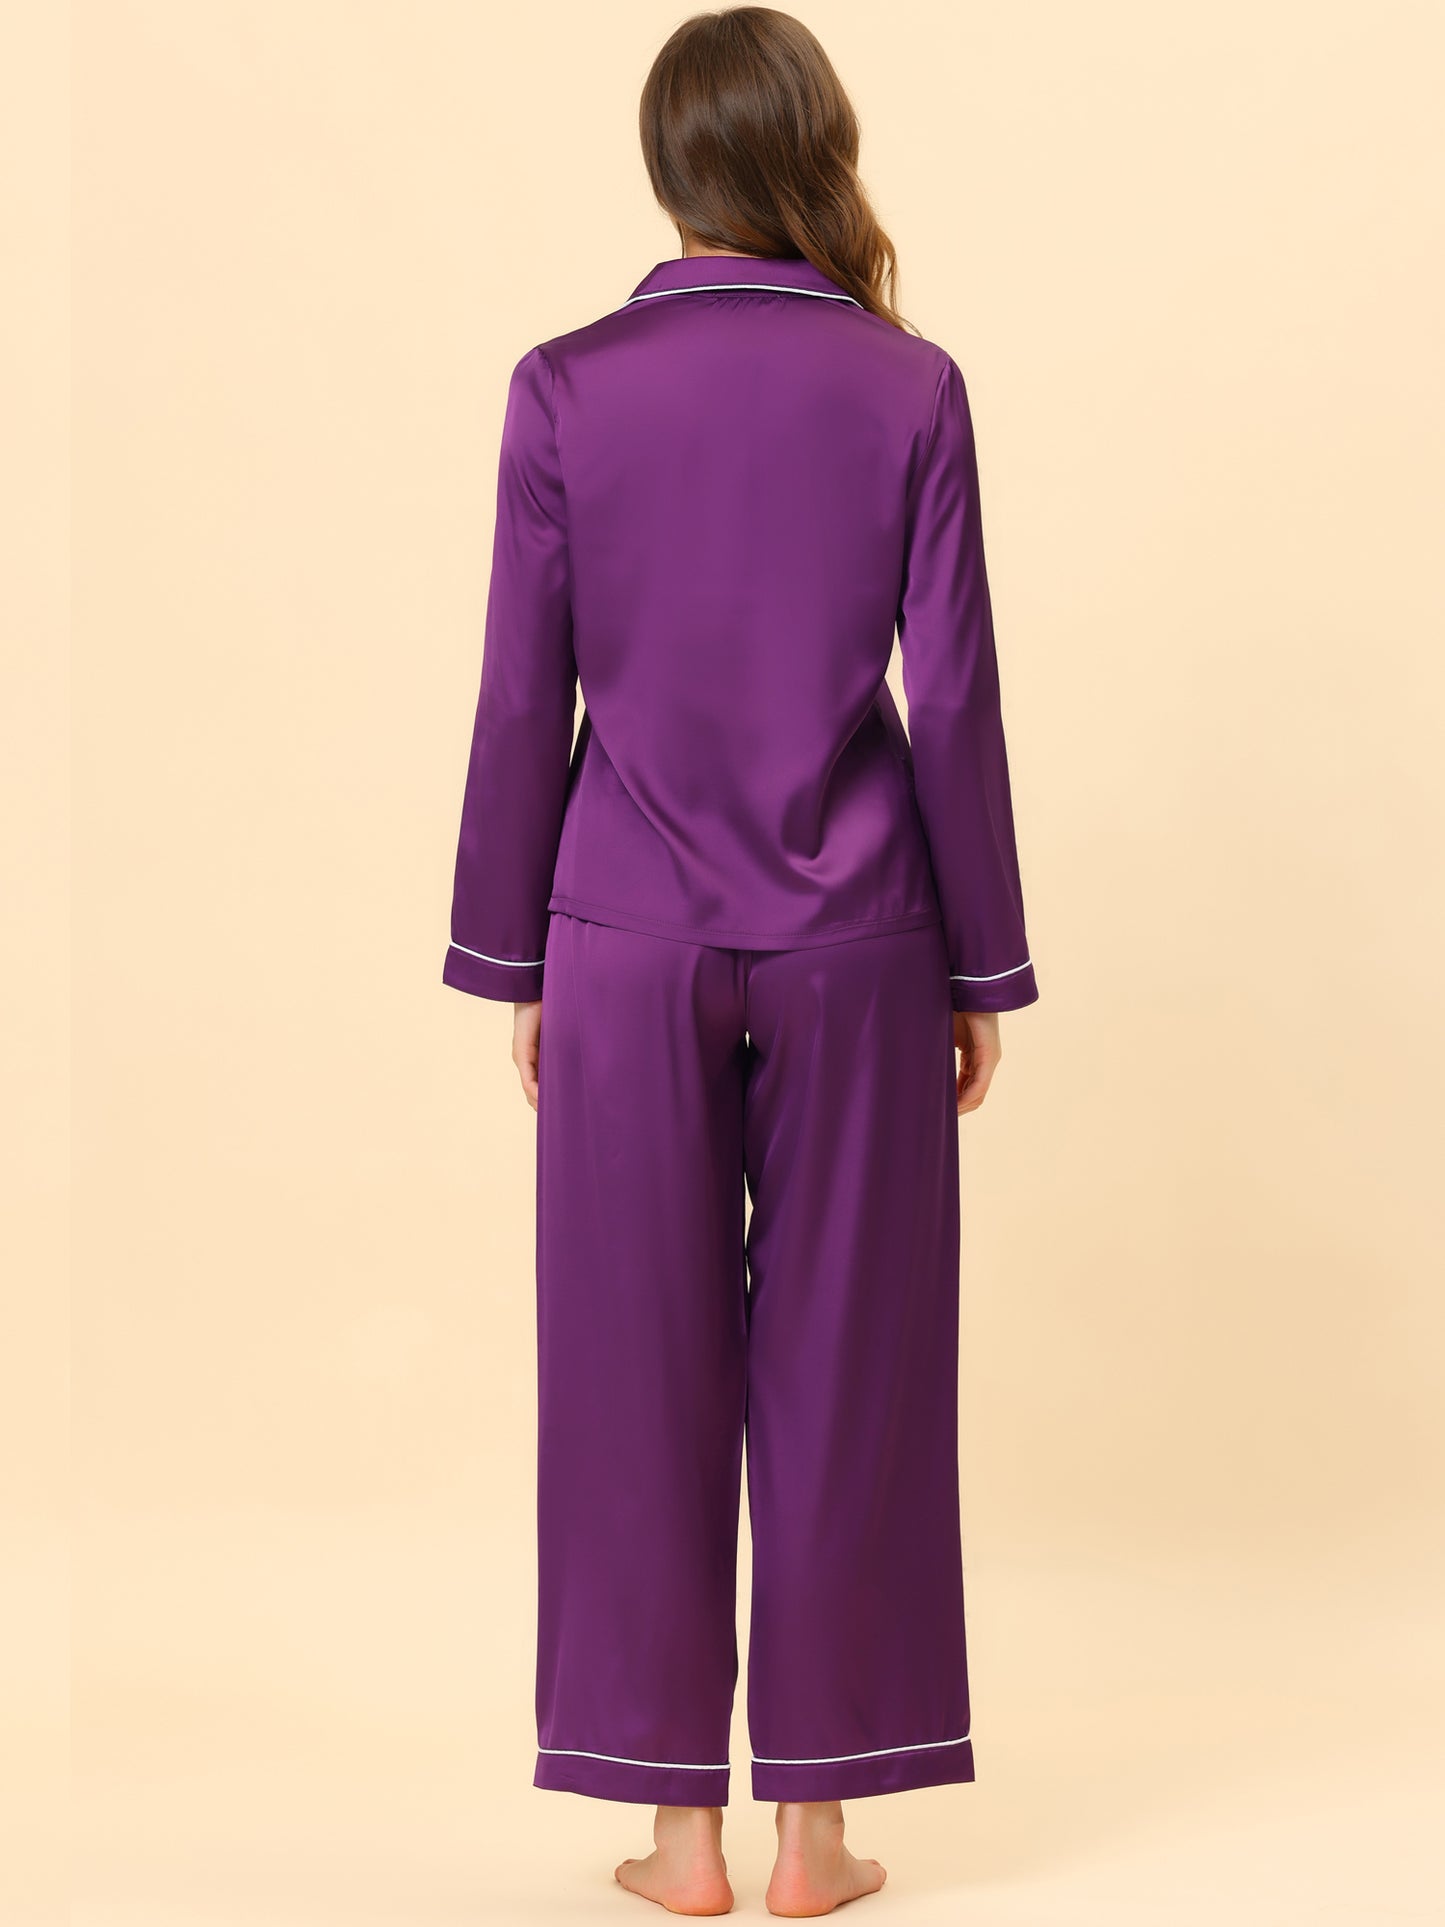 cheibear Pajama Loungewear Long Sleeves Tops and Pants Satin Sets Purple